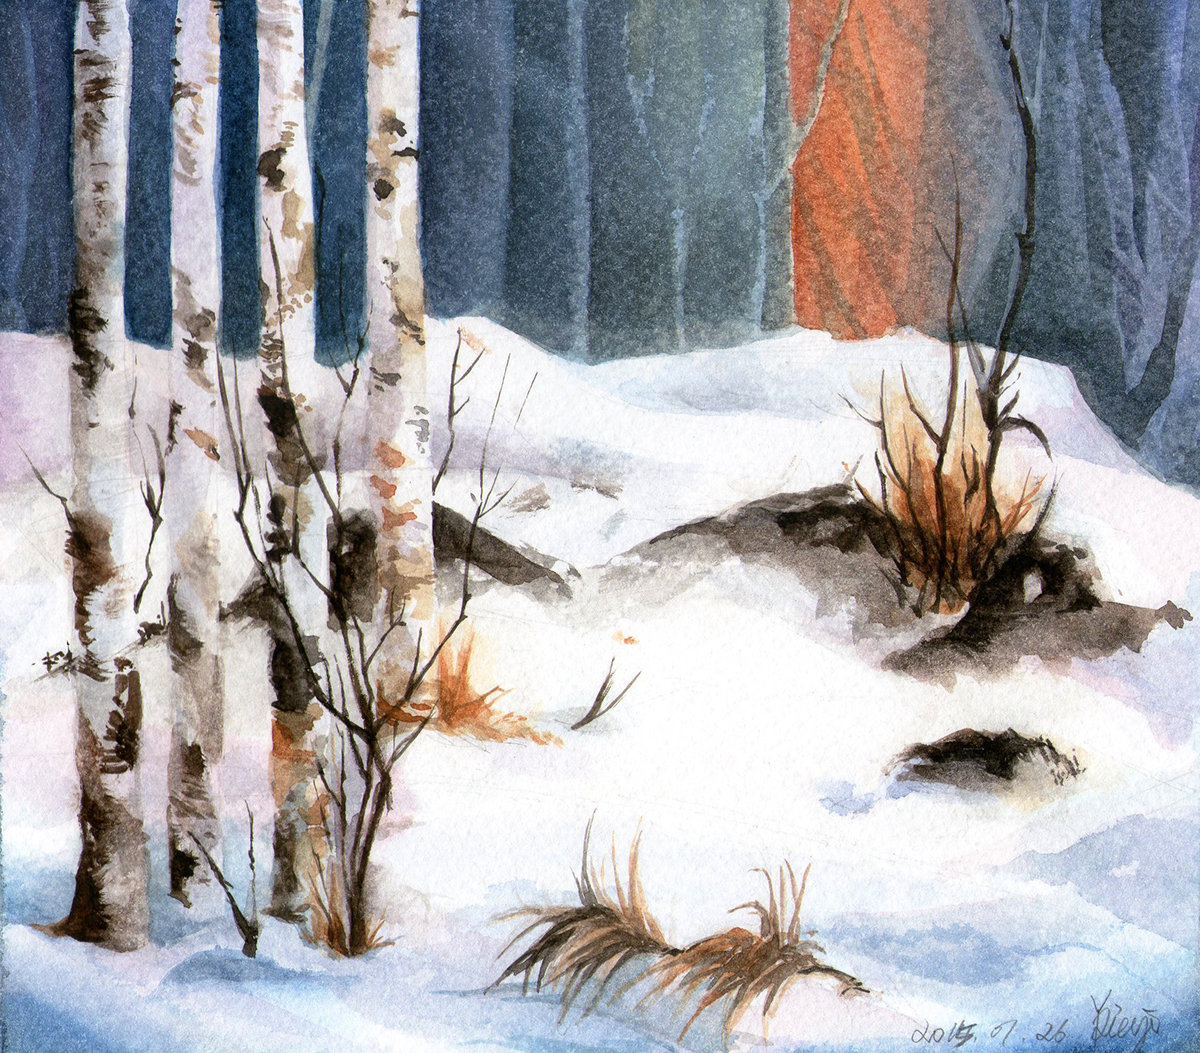 watercolor children children's book fine art master study brush art snowman squirre rabbit hare winte snow forest pinetree